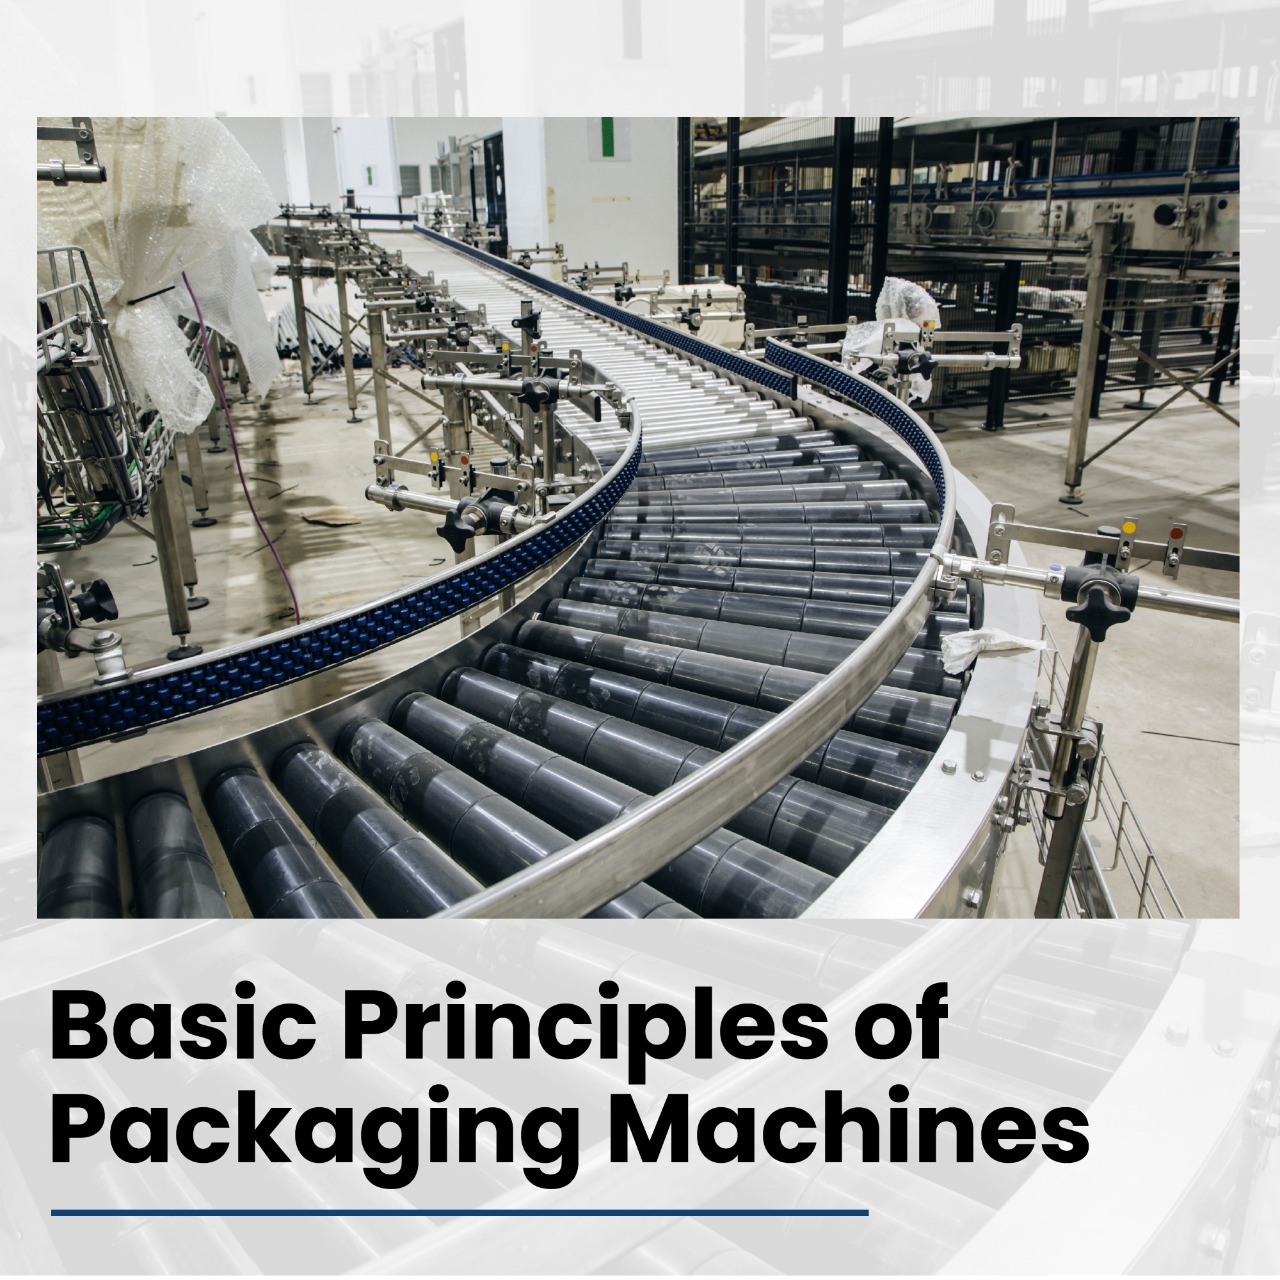 Basic principles of Packaging Machines